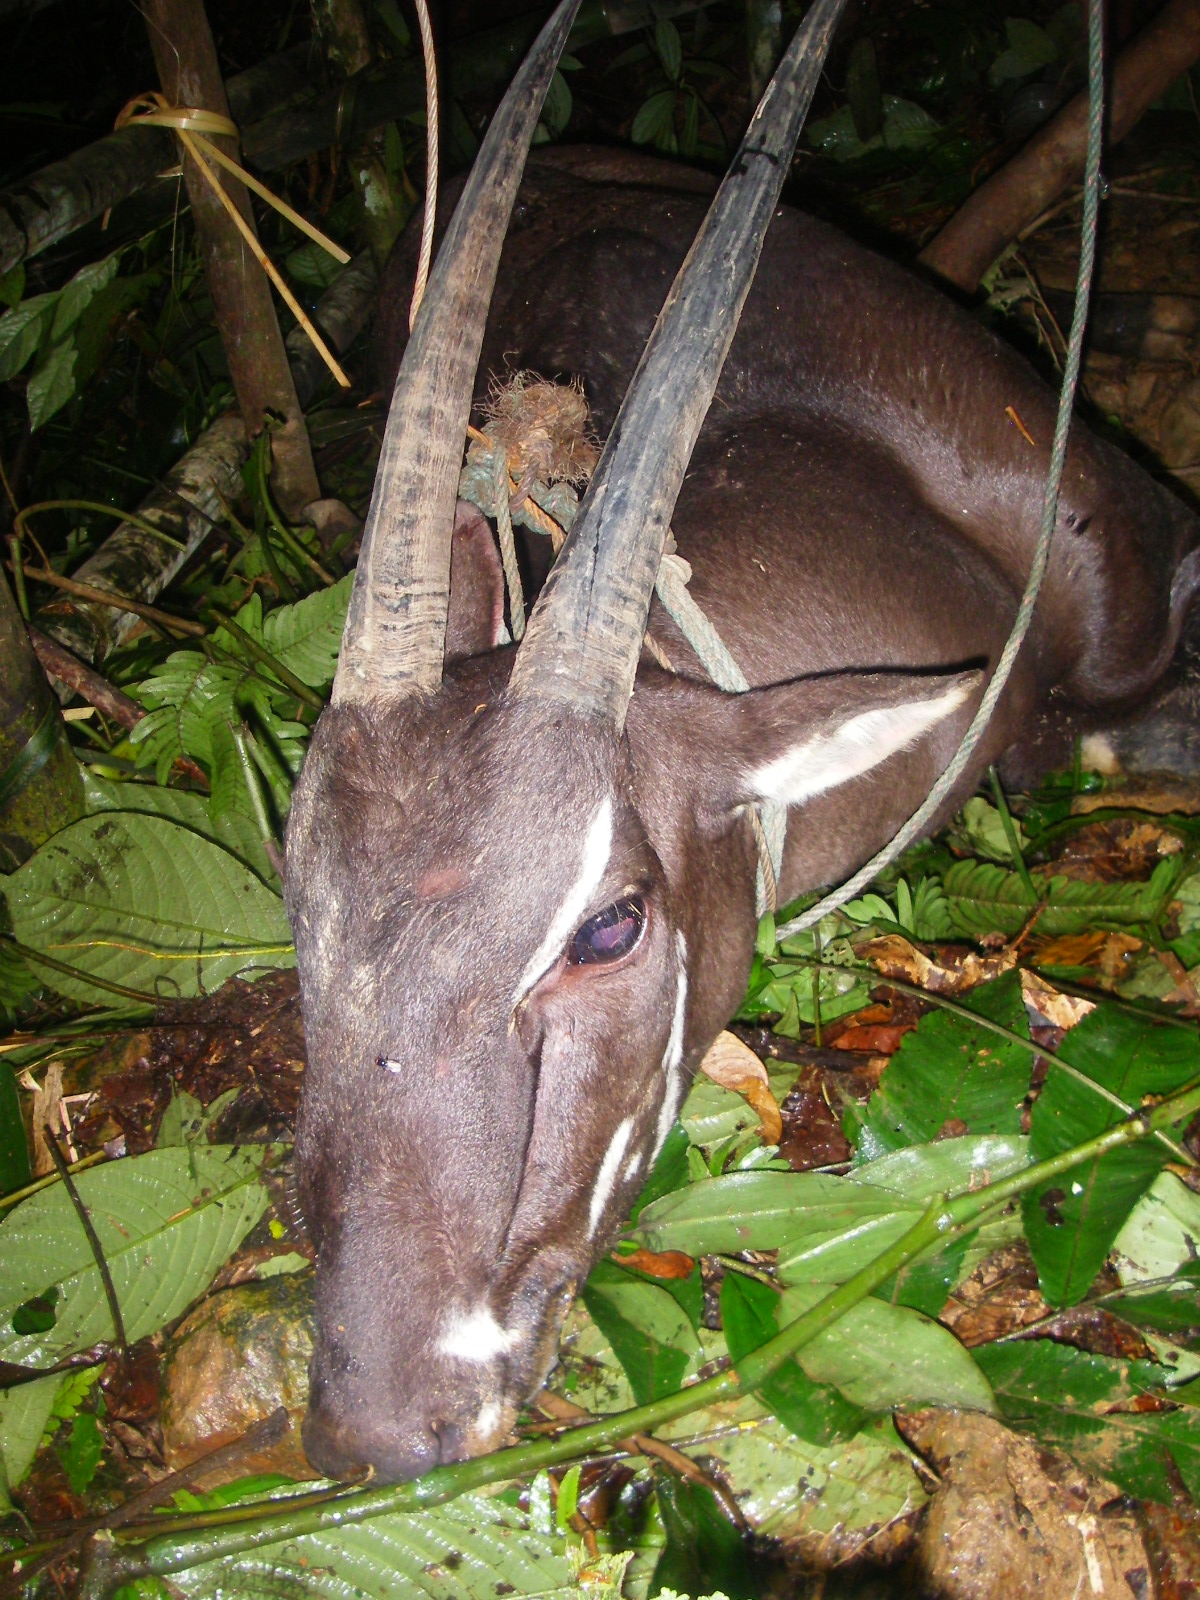 Rare sighting of a Saola in Laos